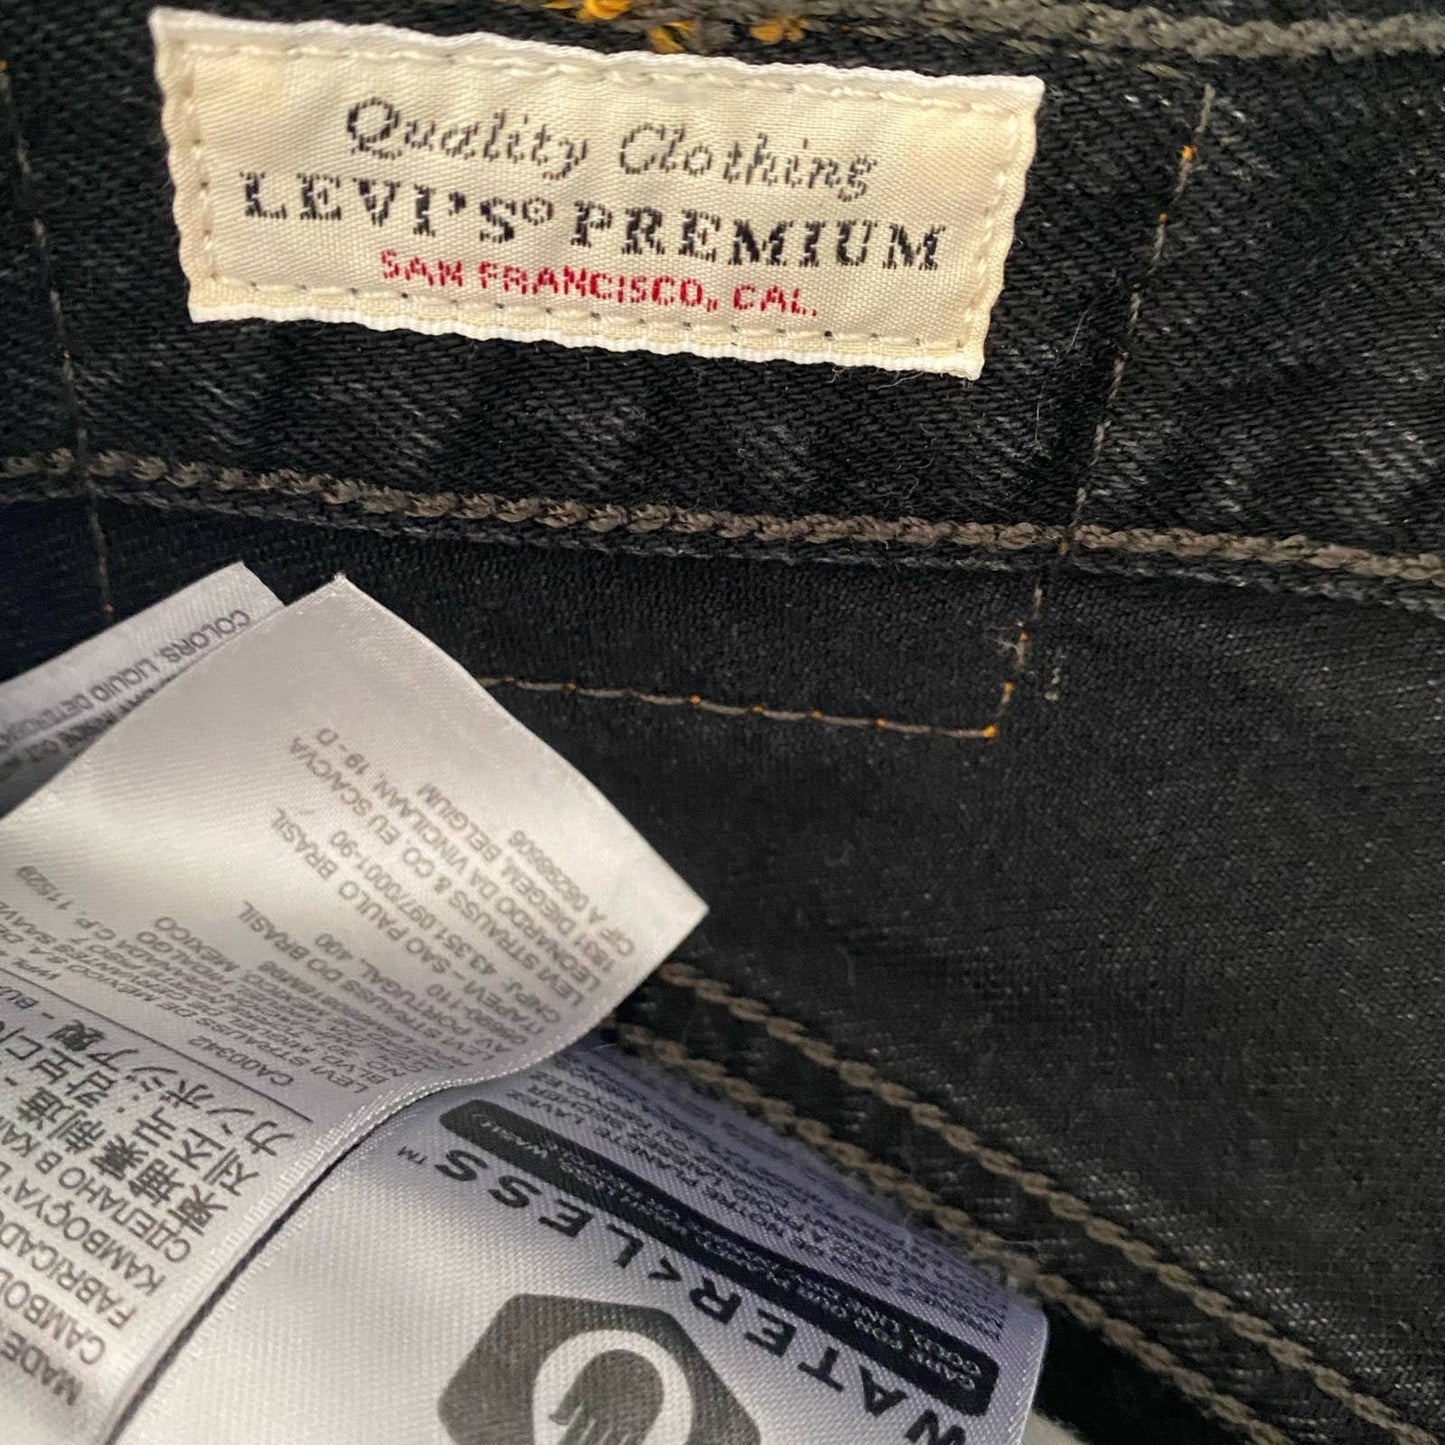 Levi's Premium 501  sz 26 cut off jean shorts